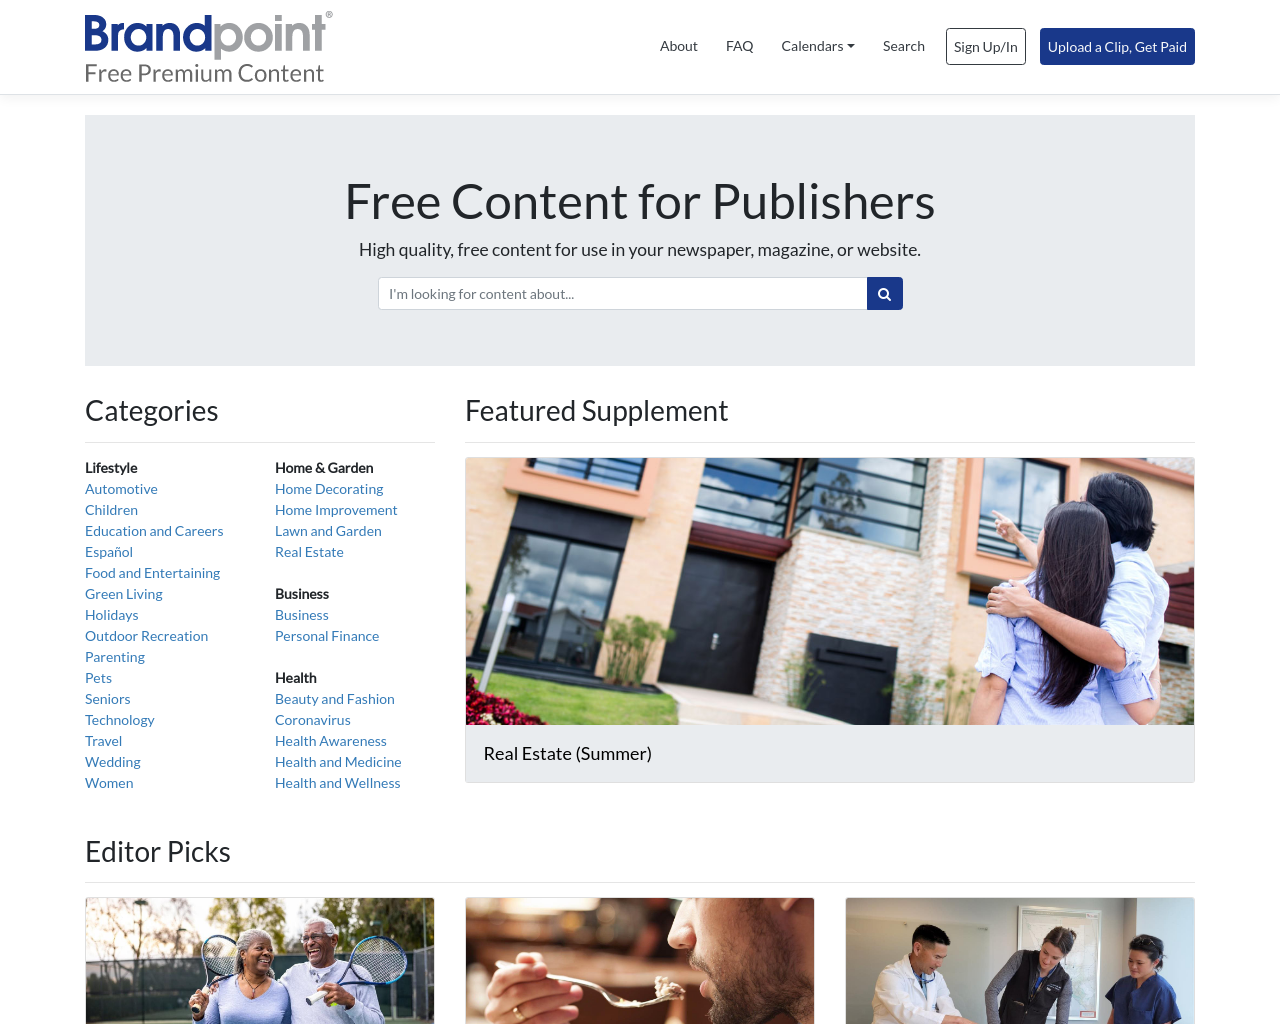 brandpointcontent.com